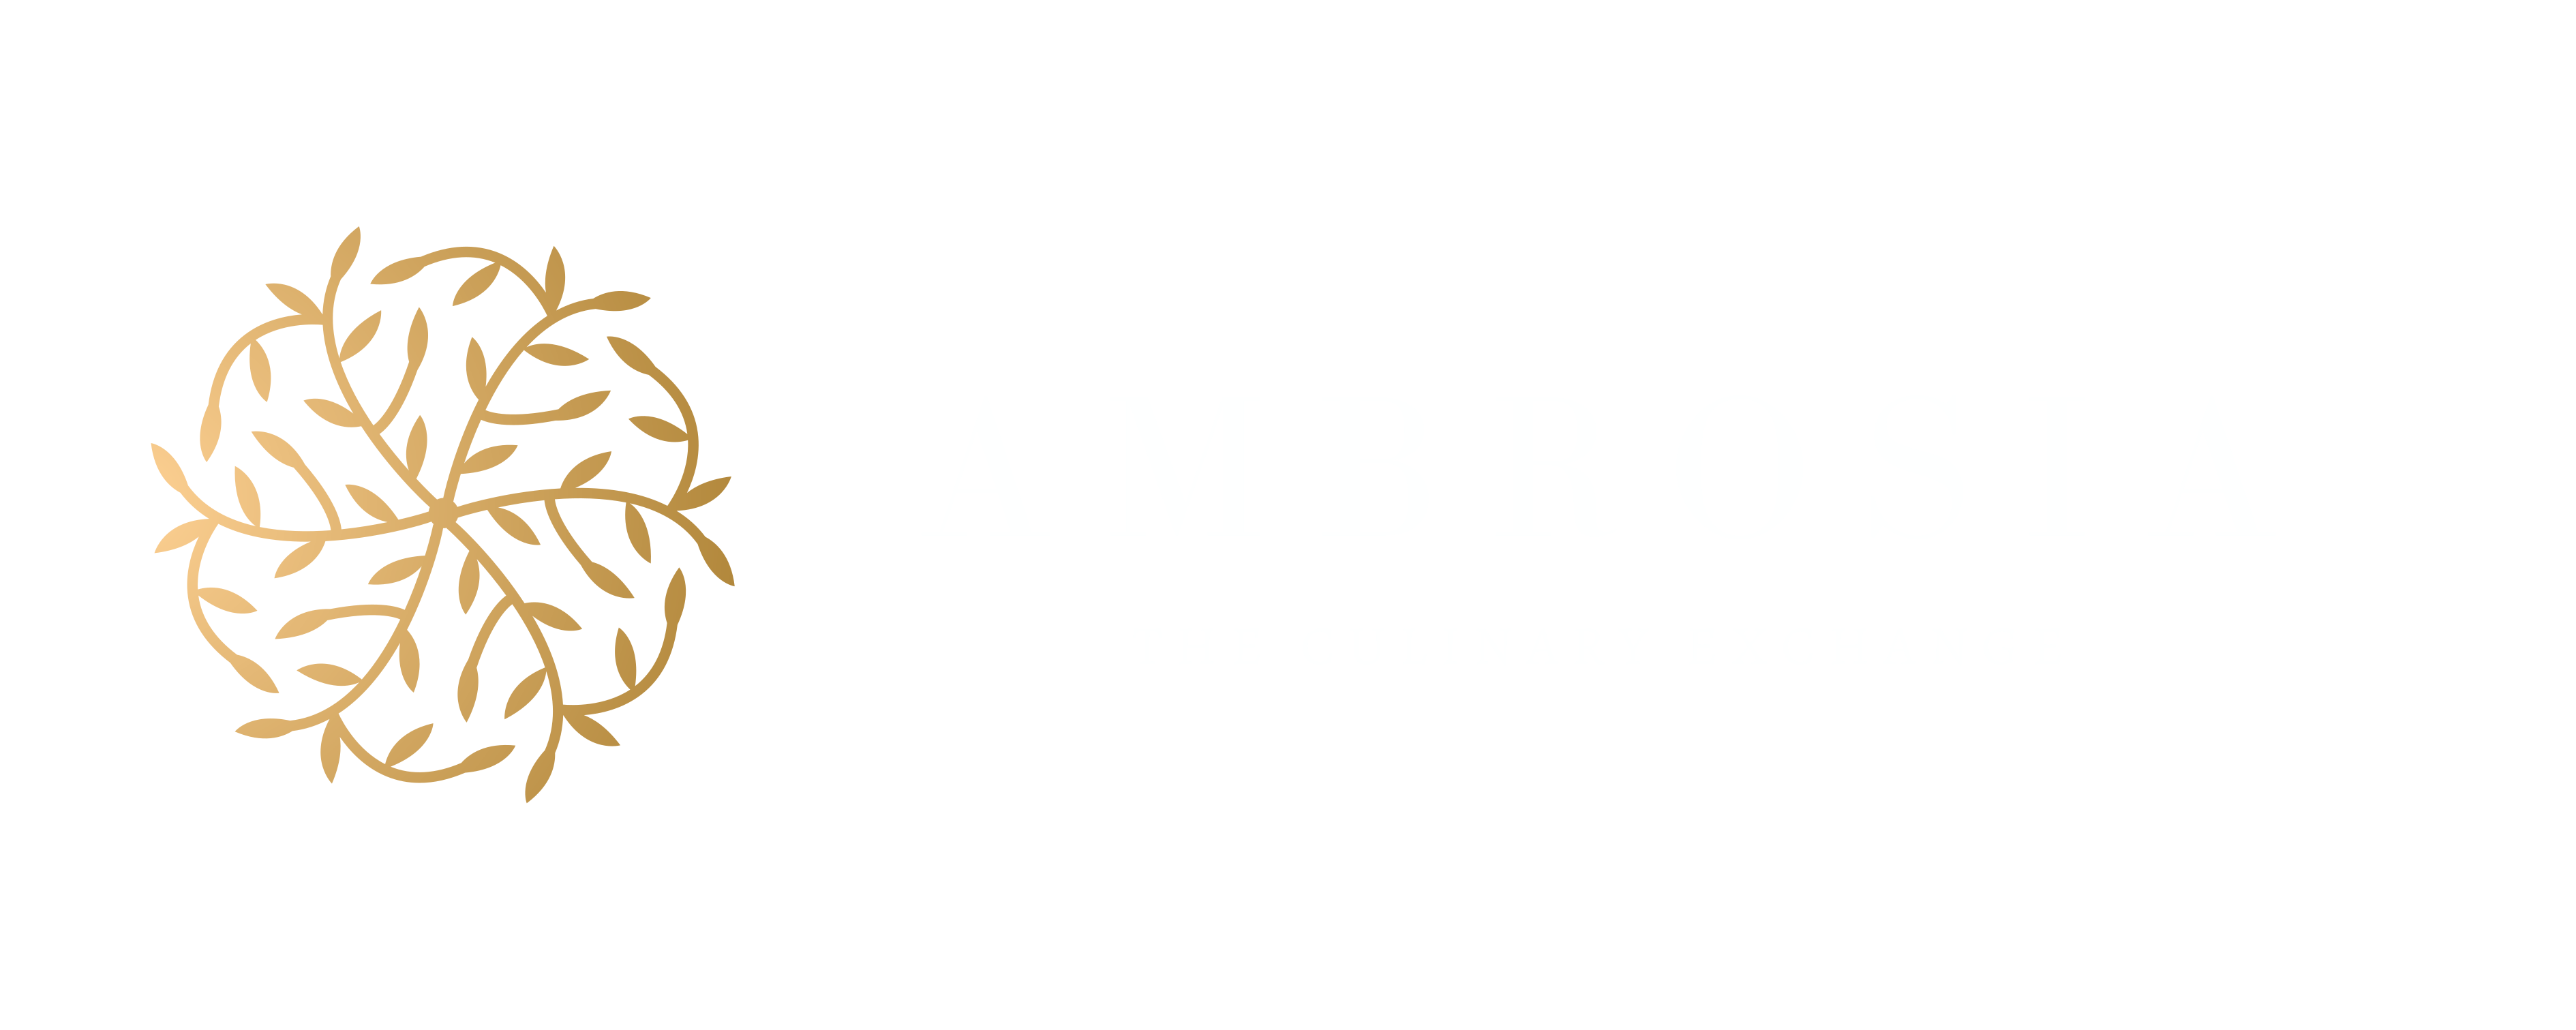 ambrosia restaurant logo